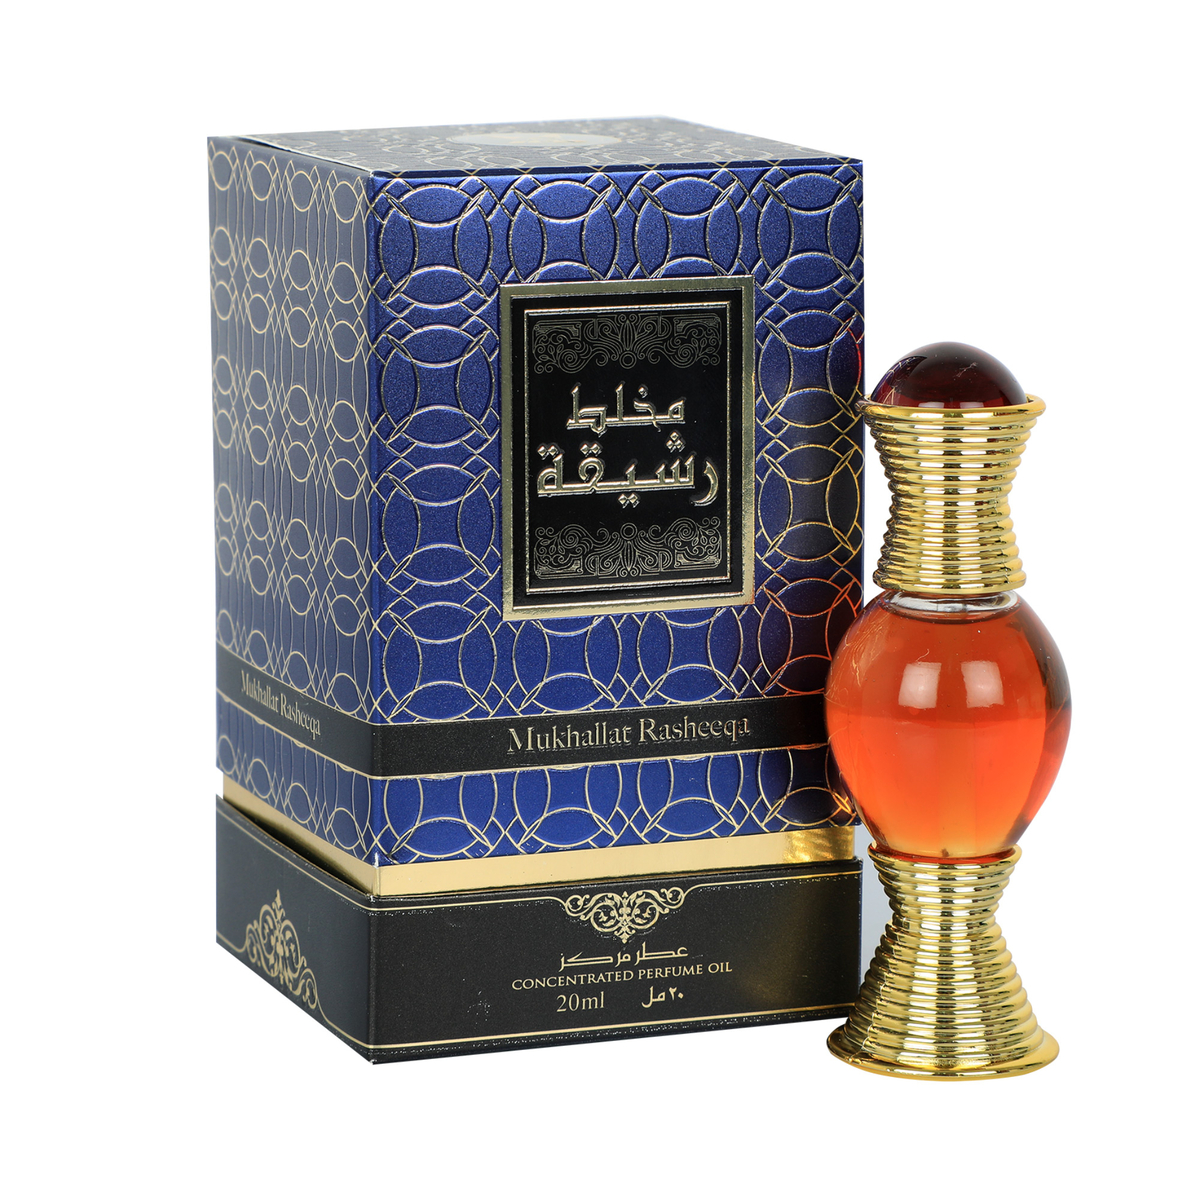 MABT Concentrated Perfume Oil Mukhallat Rasheeqa, 20 ml